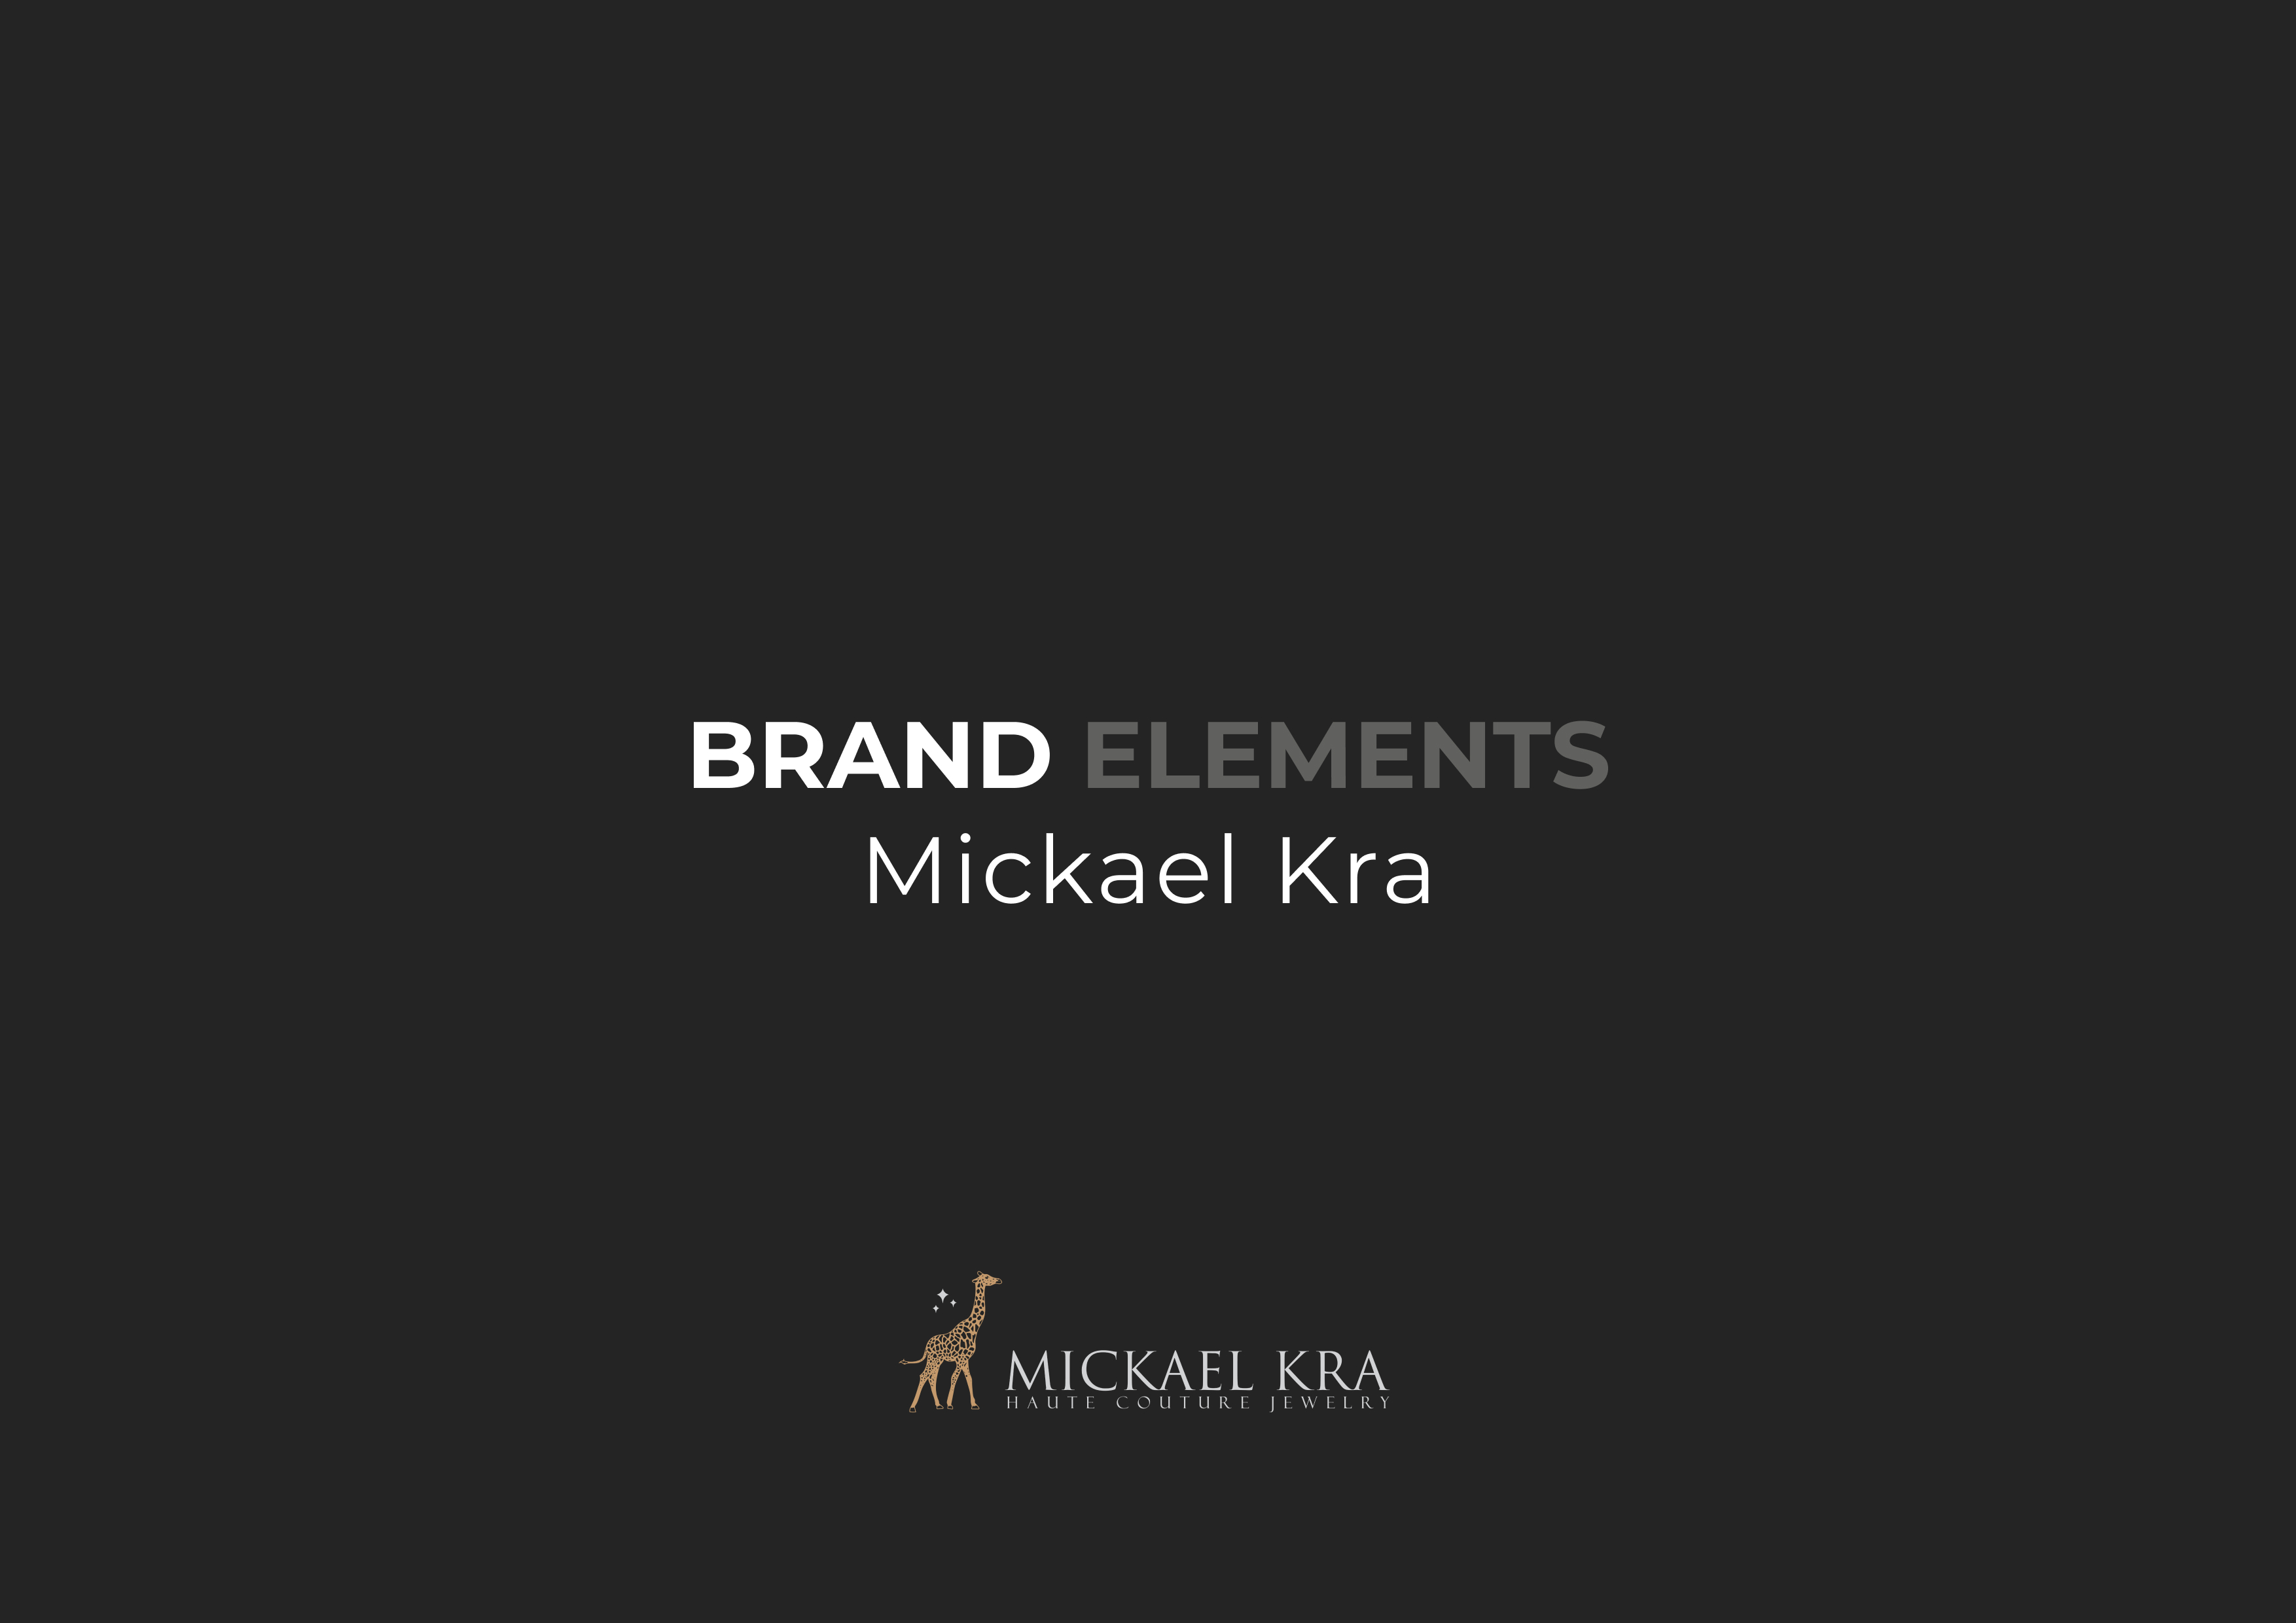 Brand elements